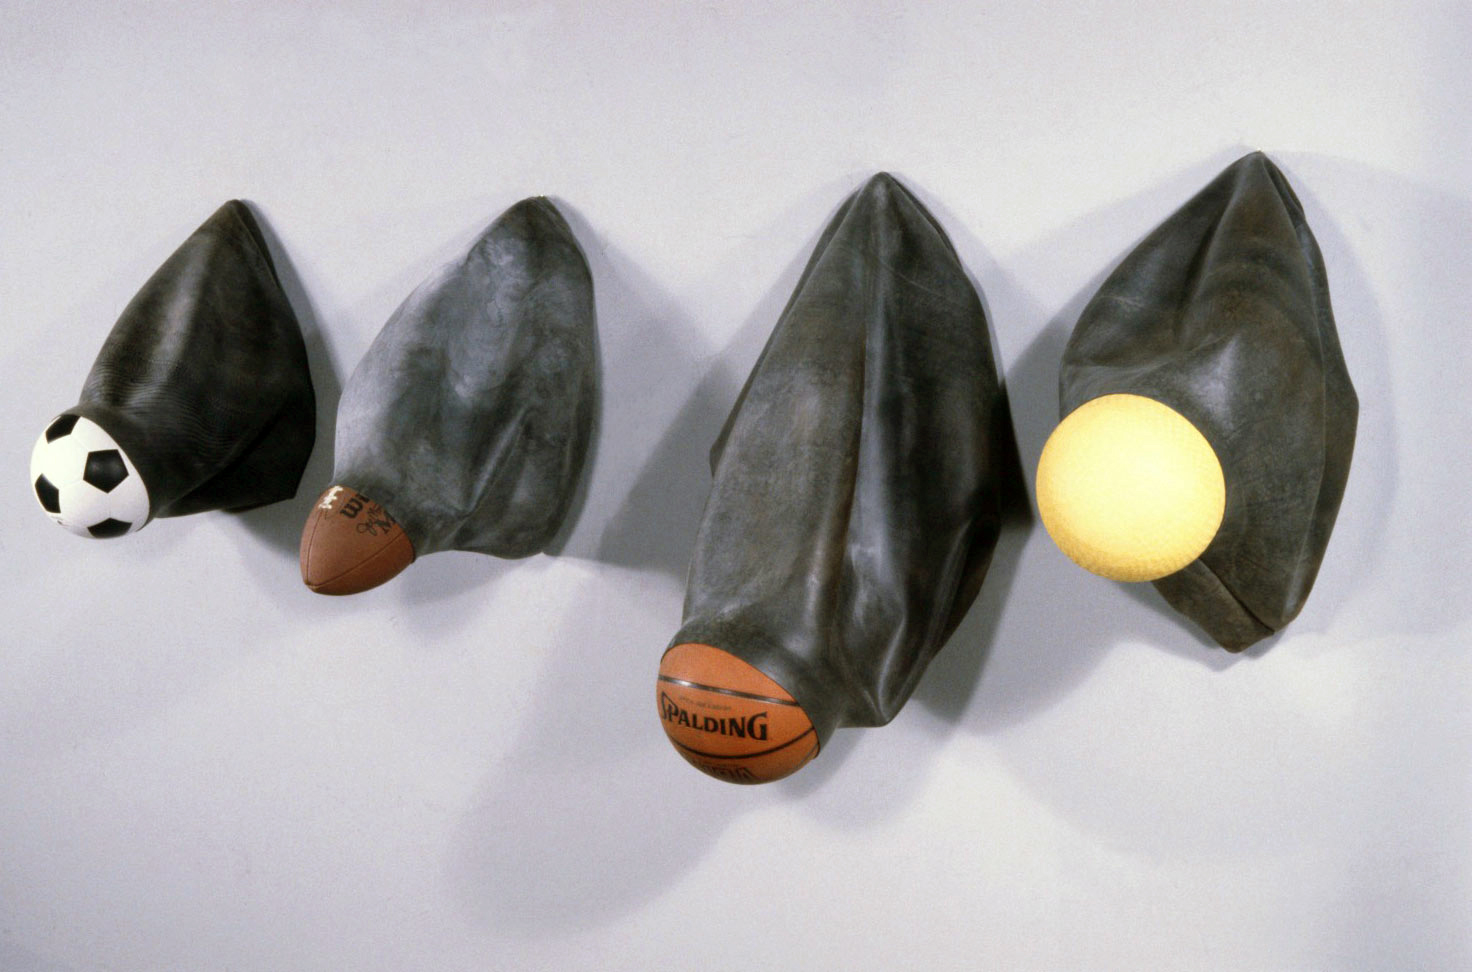   Sports Balls   1994  rubber  34 X 60 X 20"   